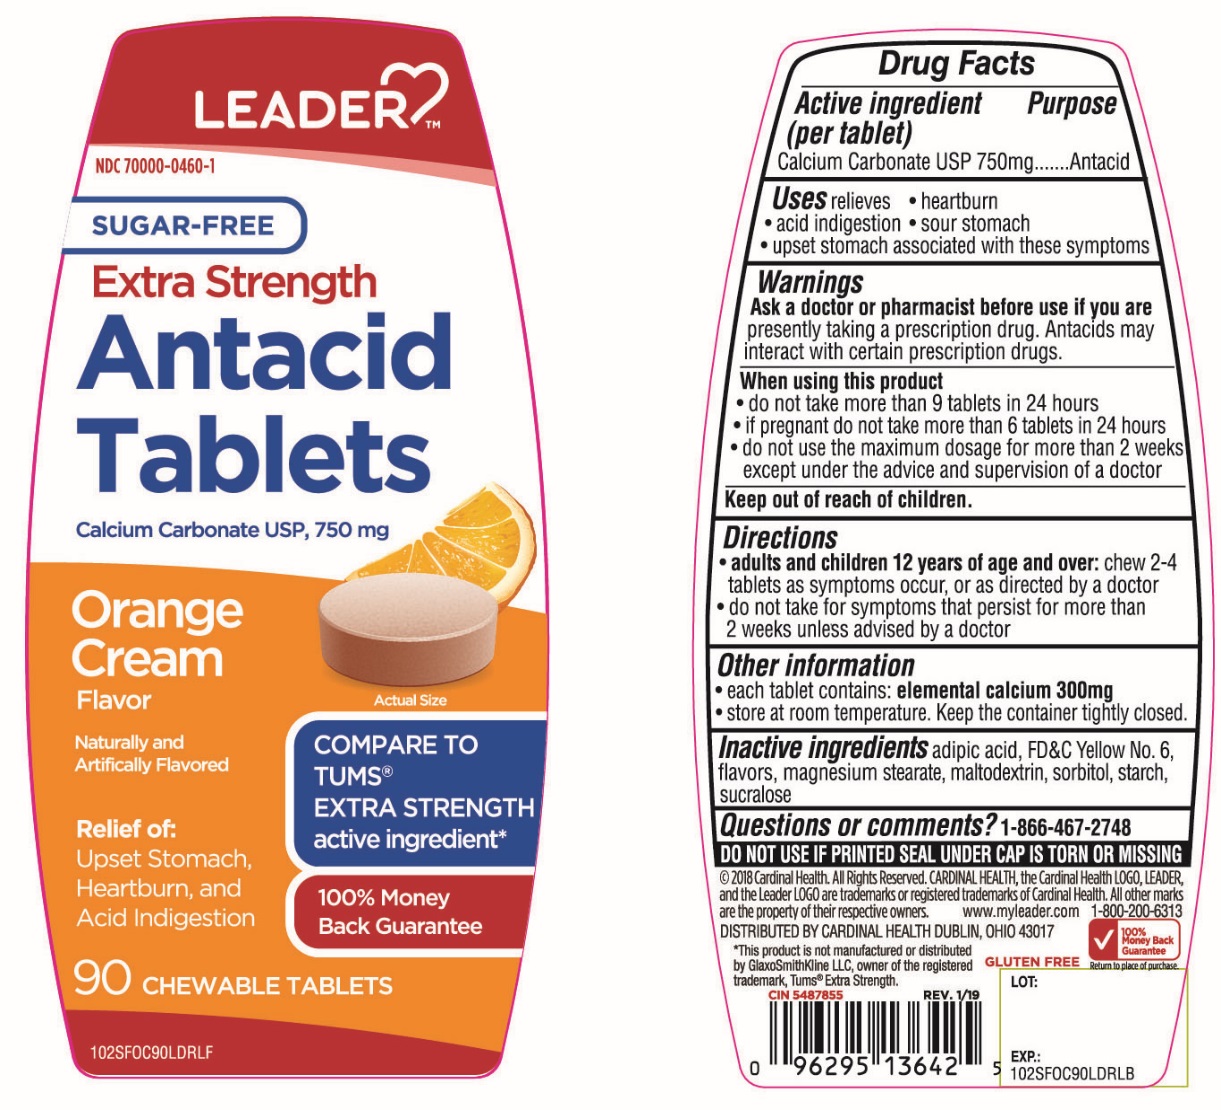 Leader Extra Strength Sugar Free Antacid Tablets Orange Cream Flavor